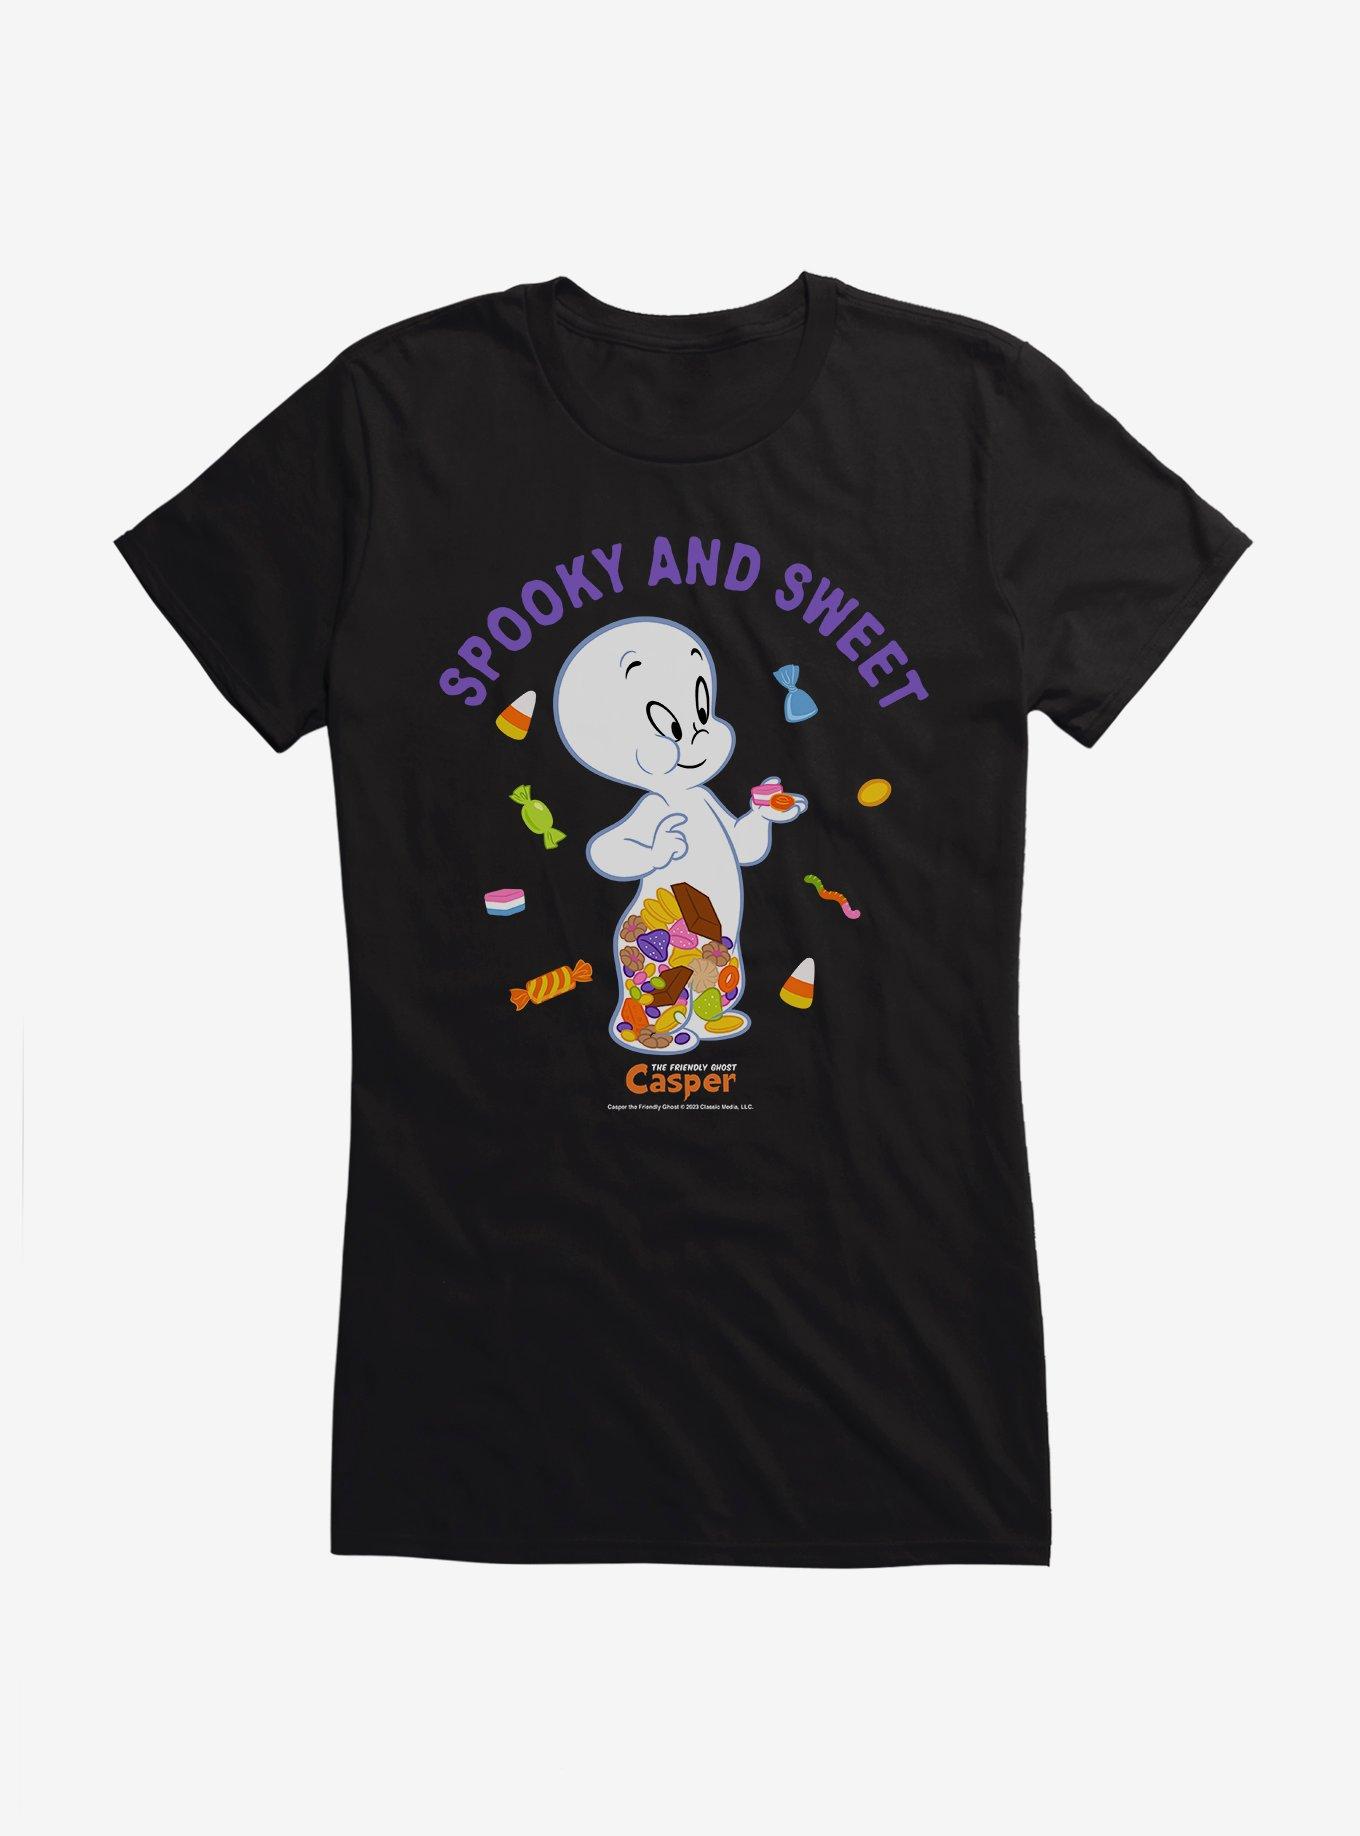 Casper Spooky And Sweet Girls T-Shirt, BLACK, hi-res